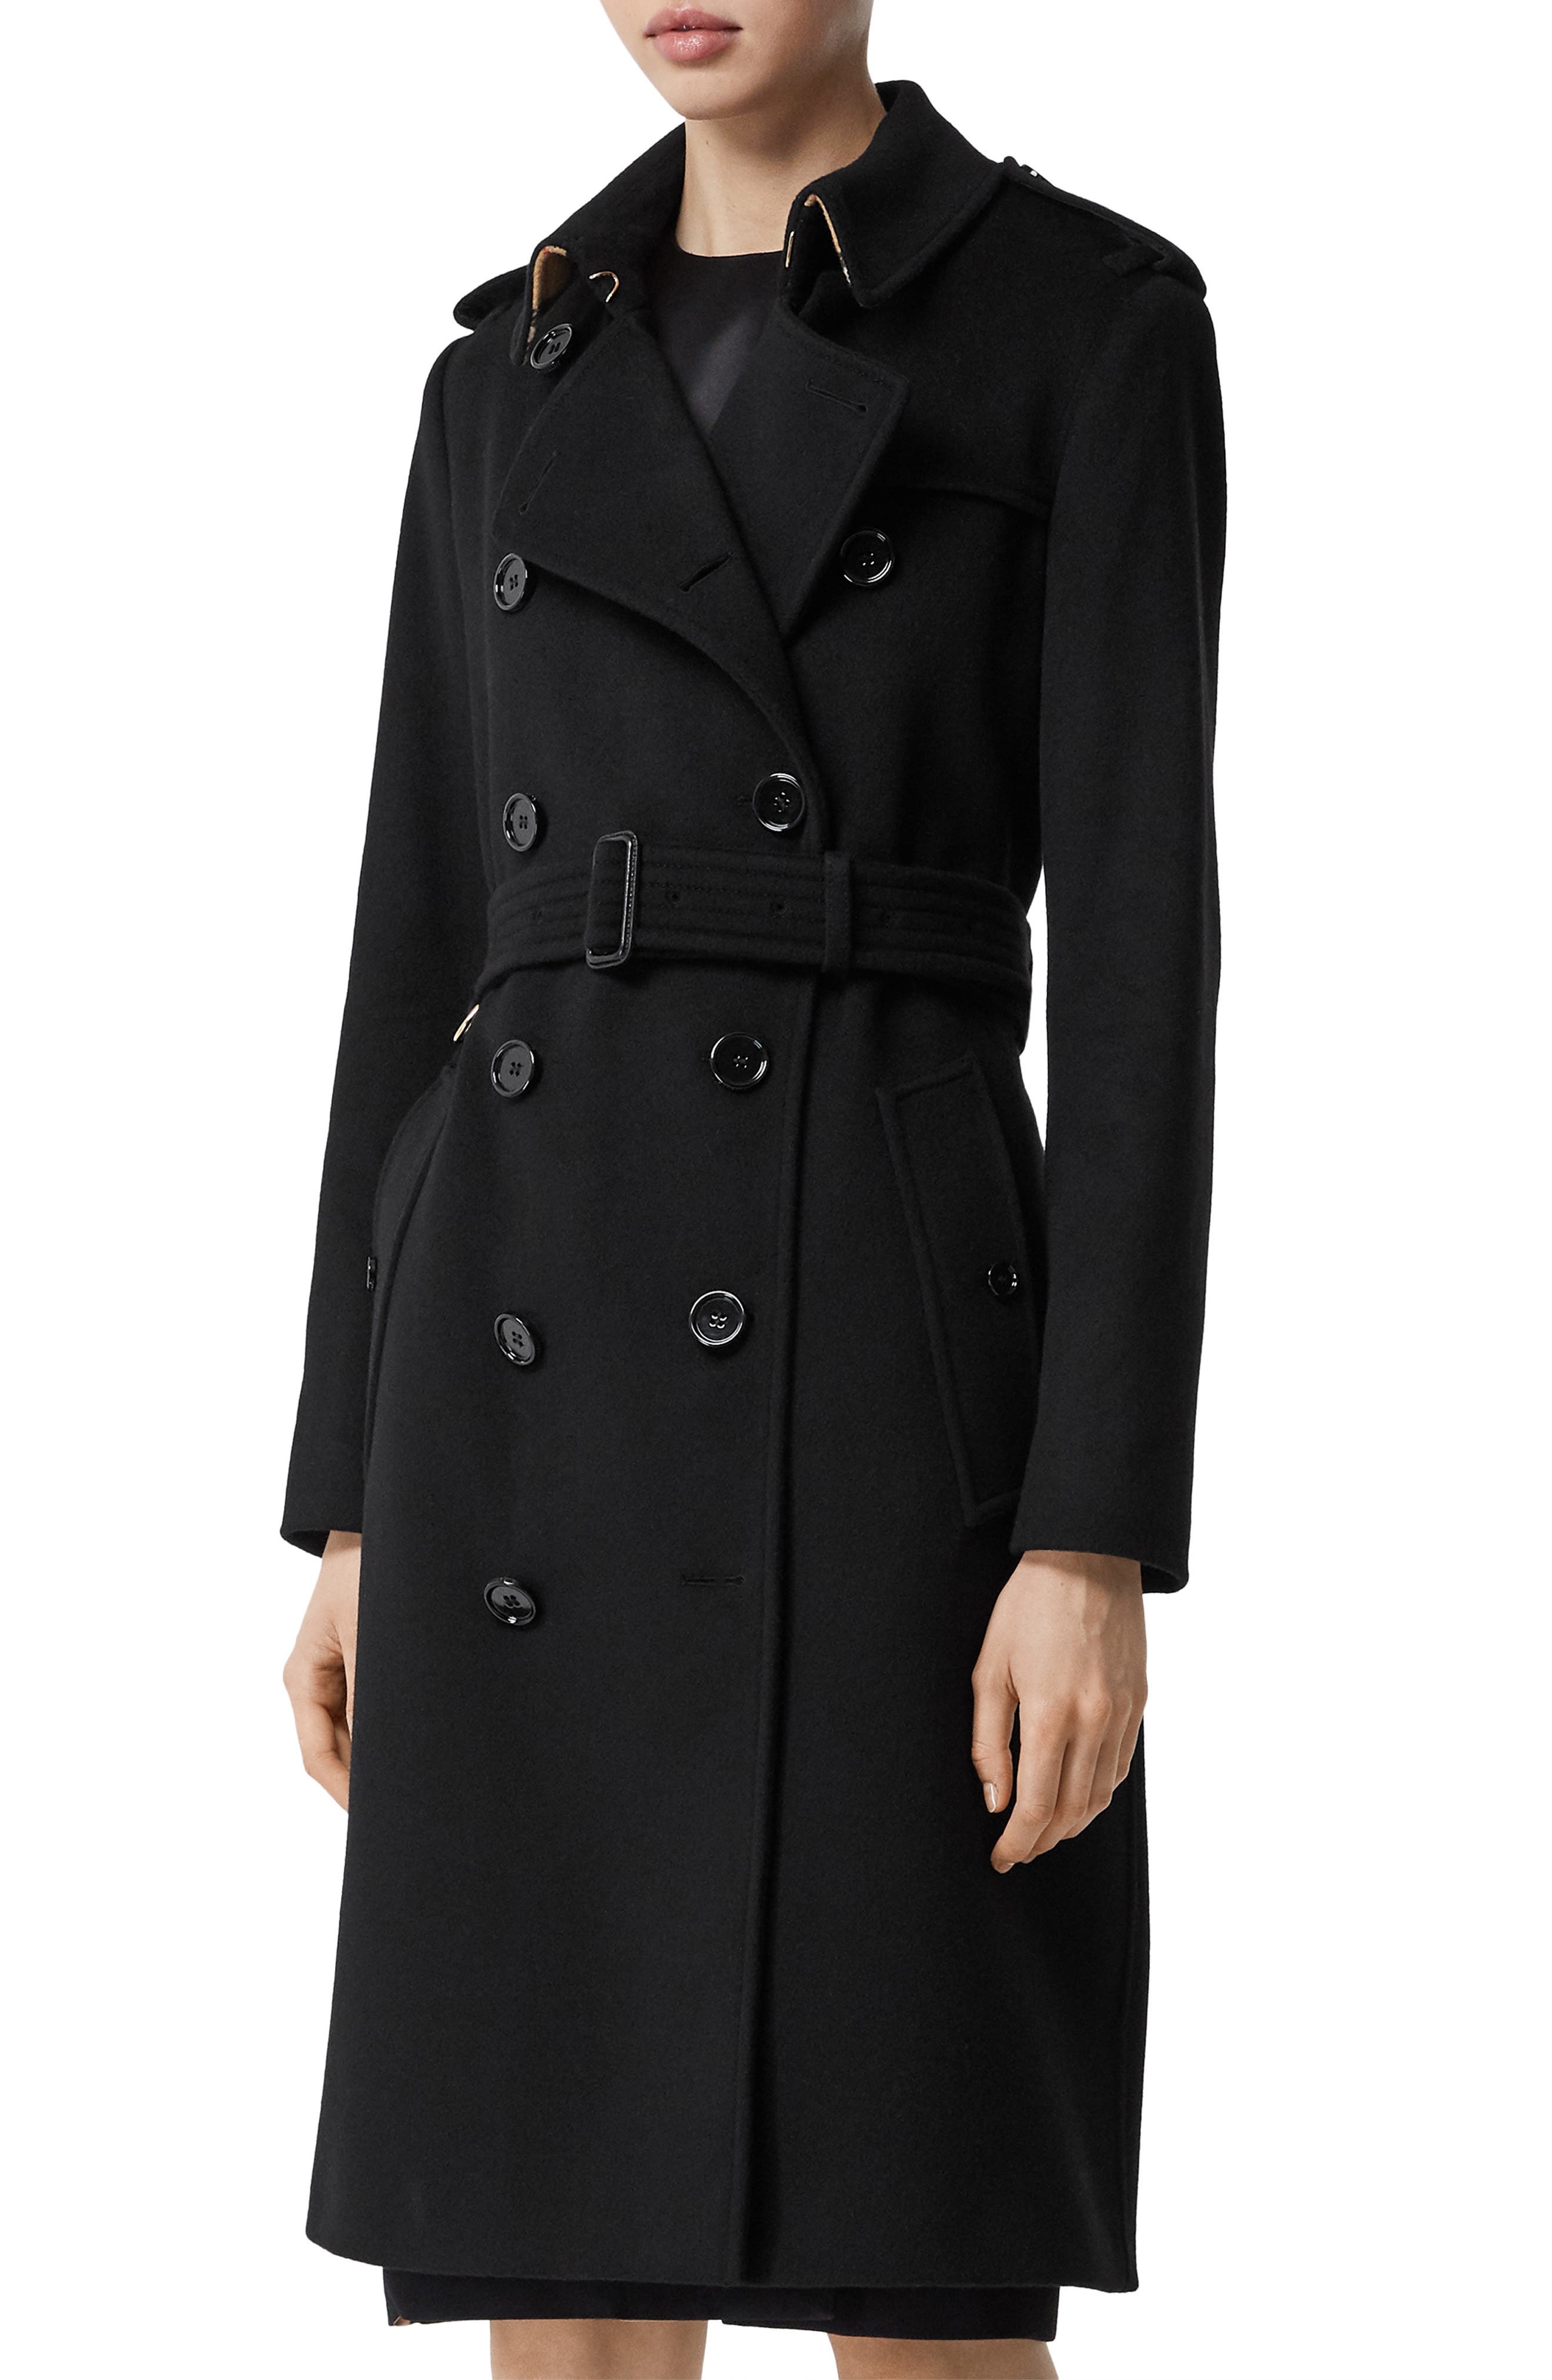 kensington cashmere trench coat